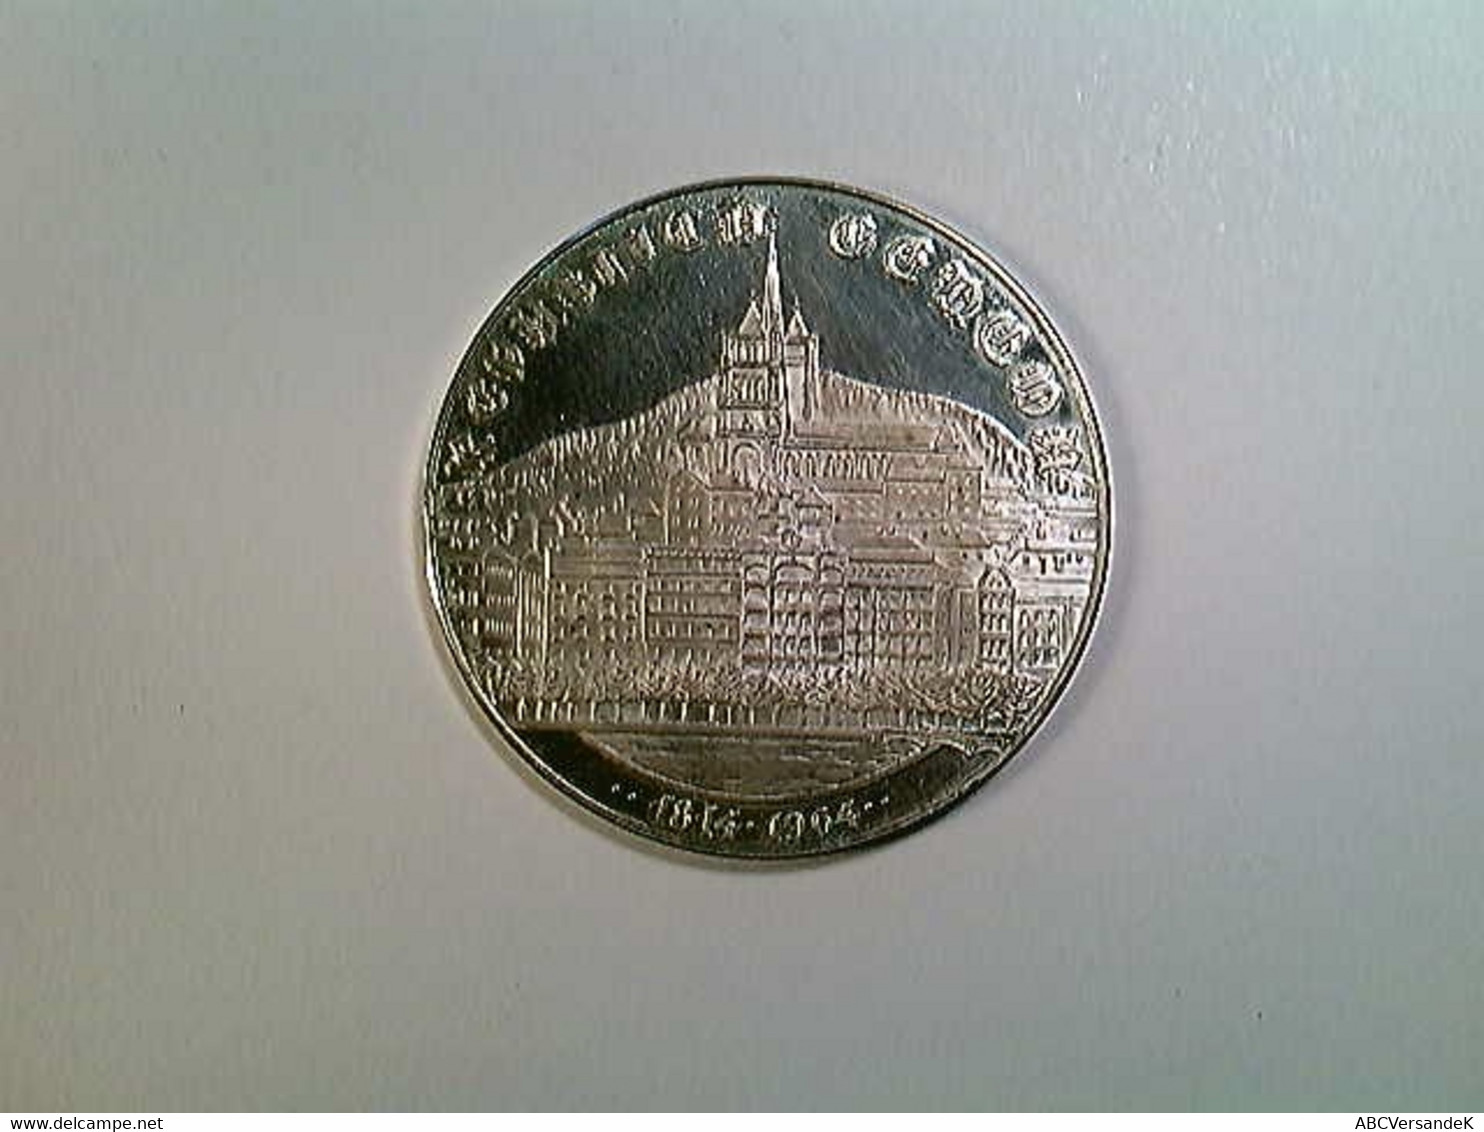 Münze Republica Geneva 1814-1964, Schweiz Kantonalmünze, Argor, Silber, SELTEN! - Numismatiek